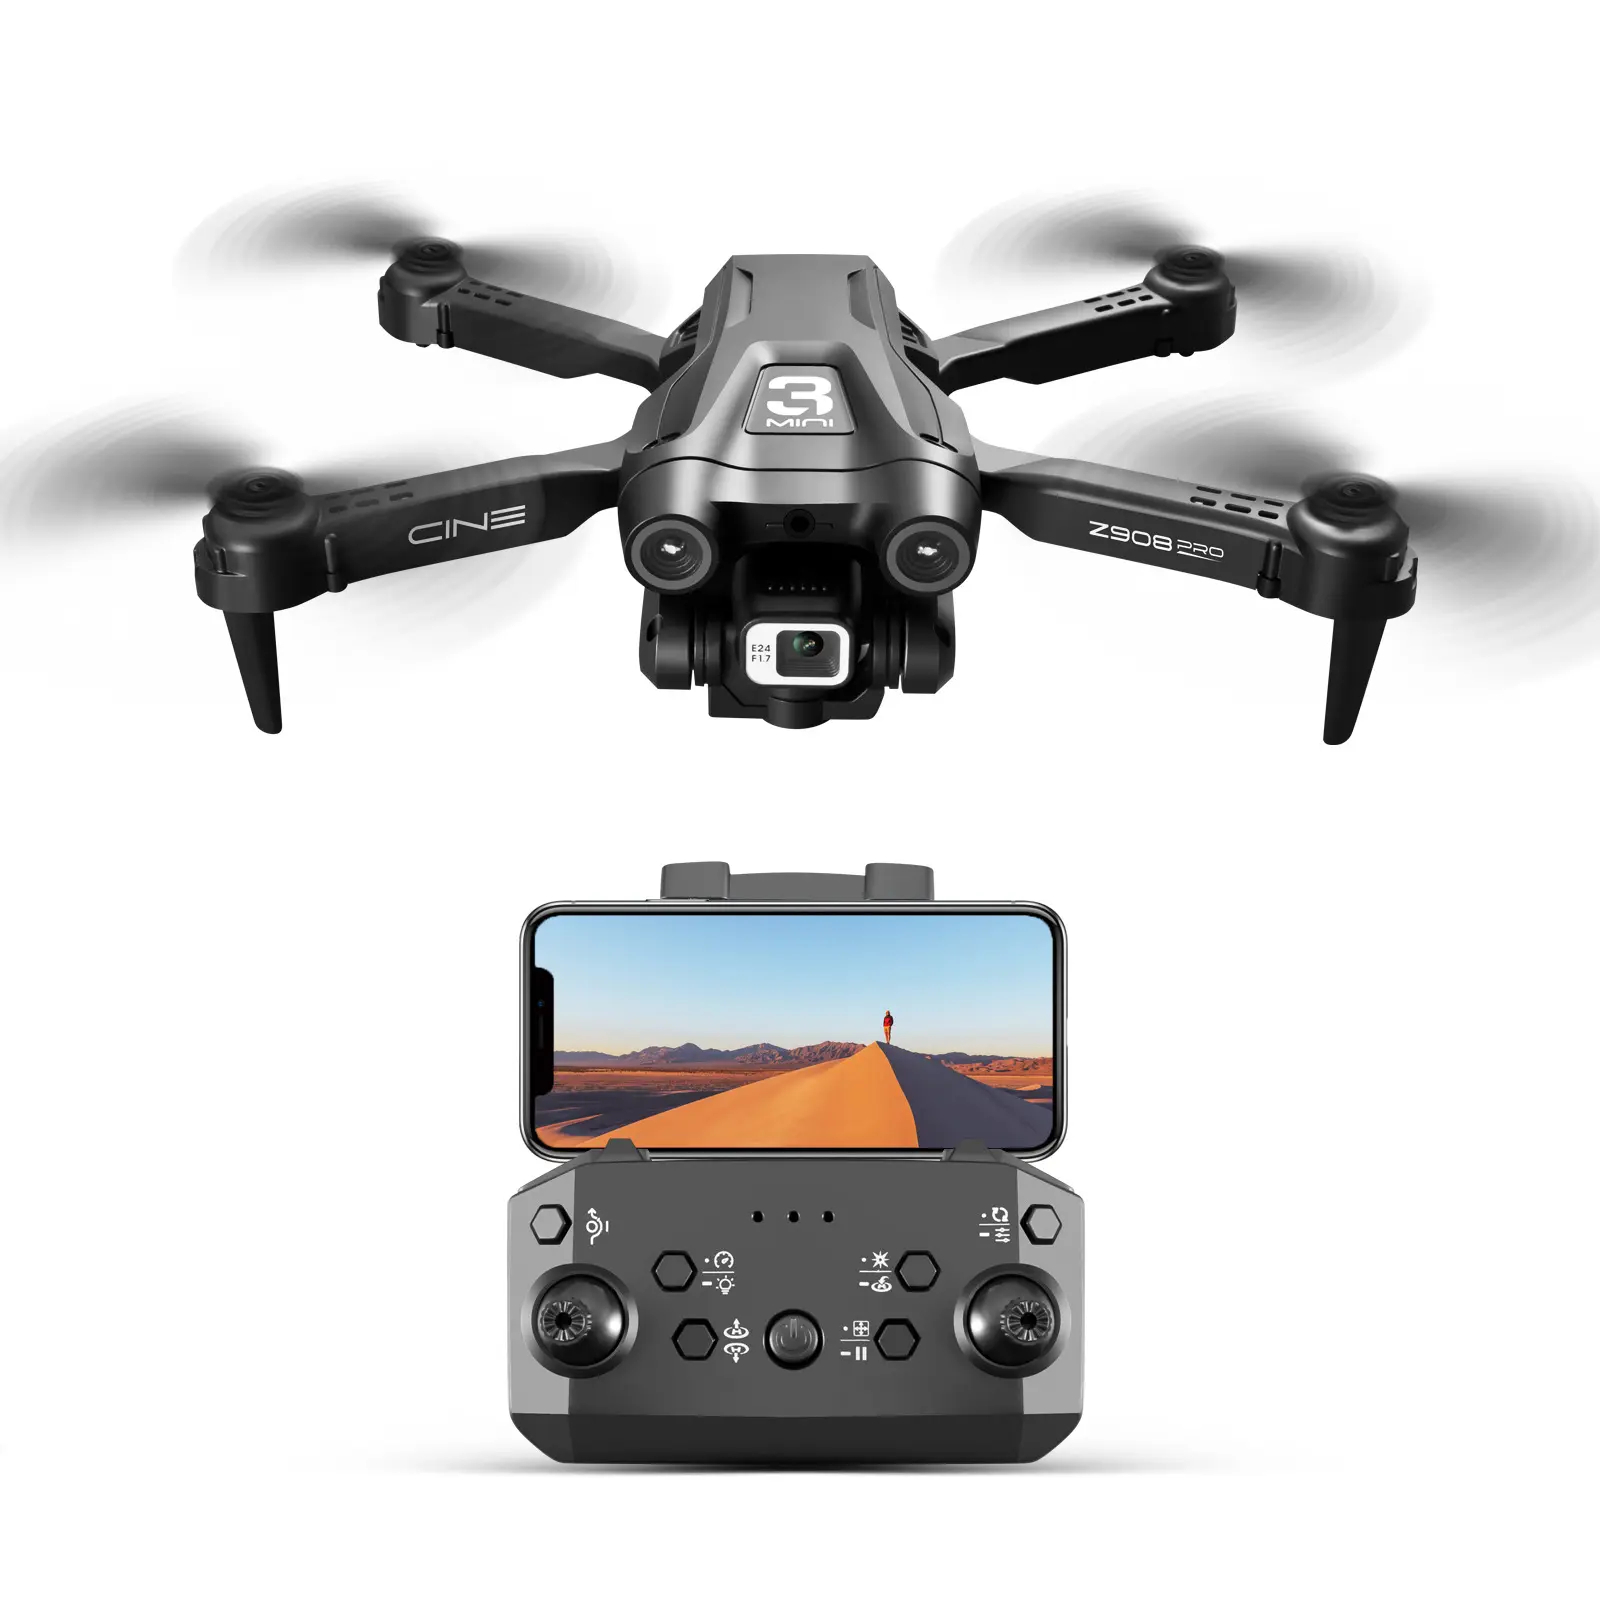 Youngeast drone wifi camera 4k professional 100m distance video 2.4g fpv hd camera drone stabilizer mobile control rtf drone